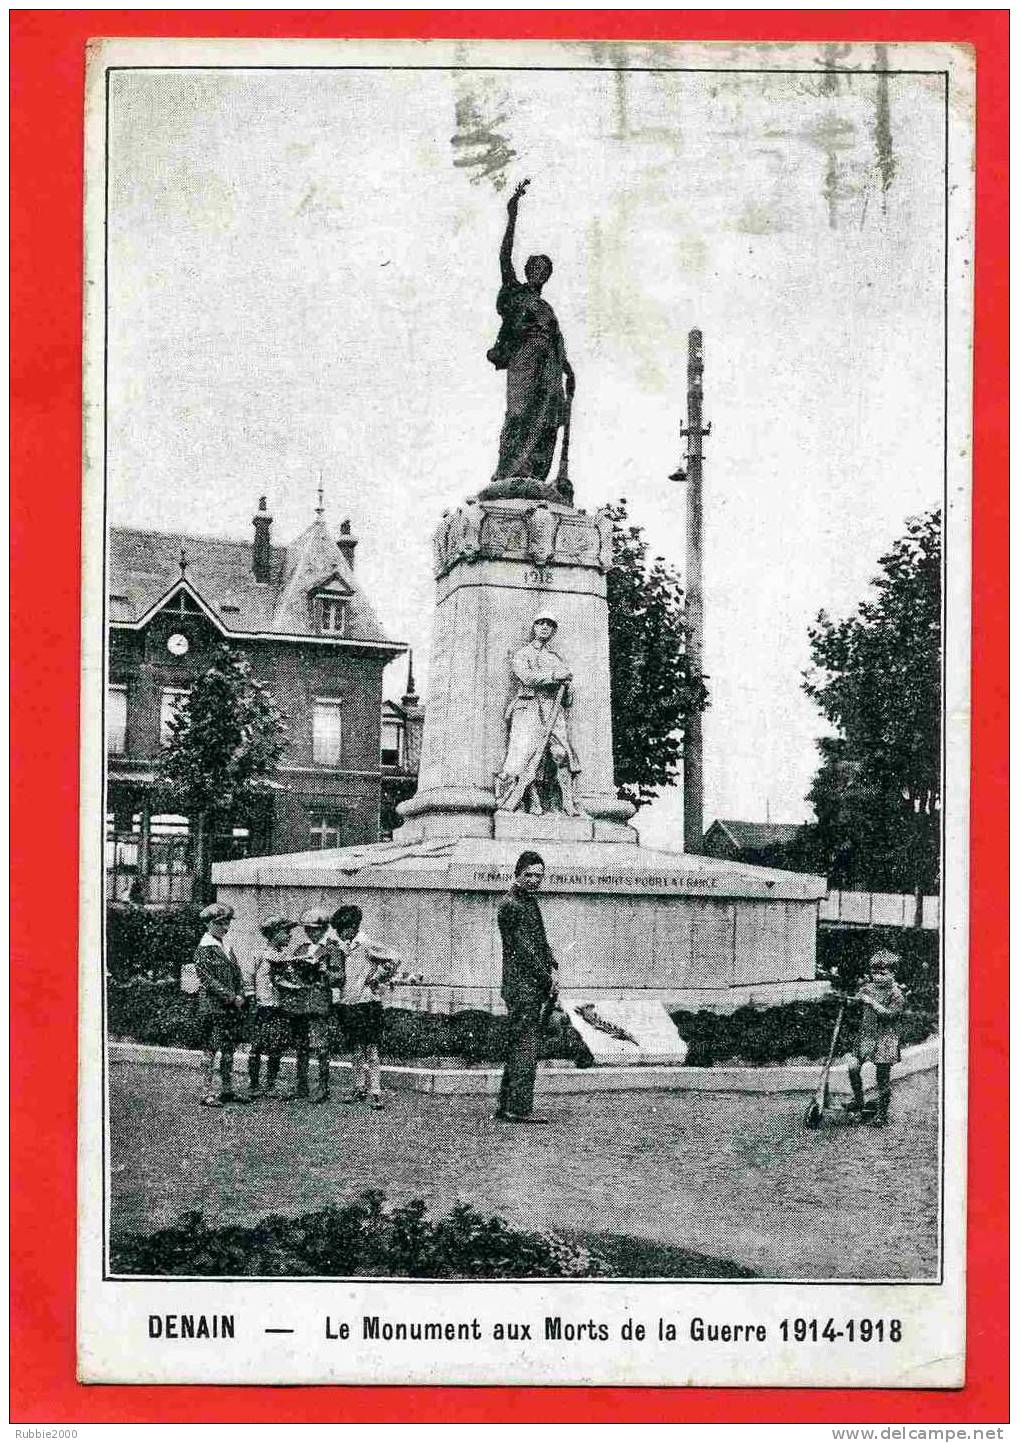 DENAIN 1930 MONUMENT AUX MORTS GUERRE 1914 1918 CARTE EN BON ETAT - Denain